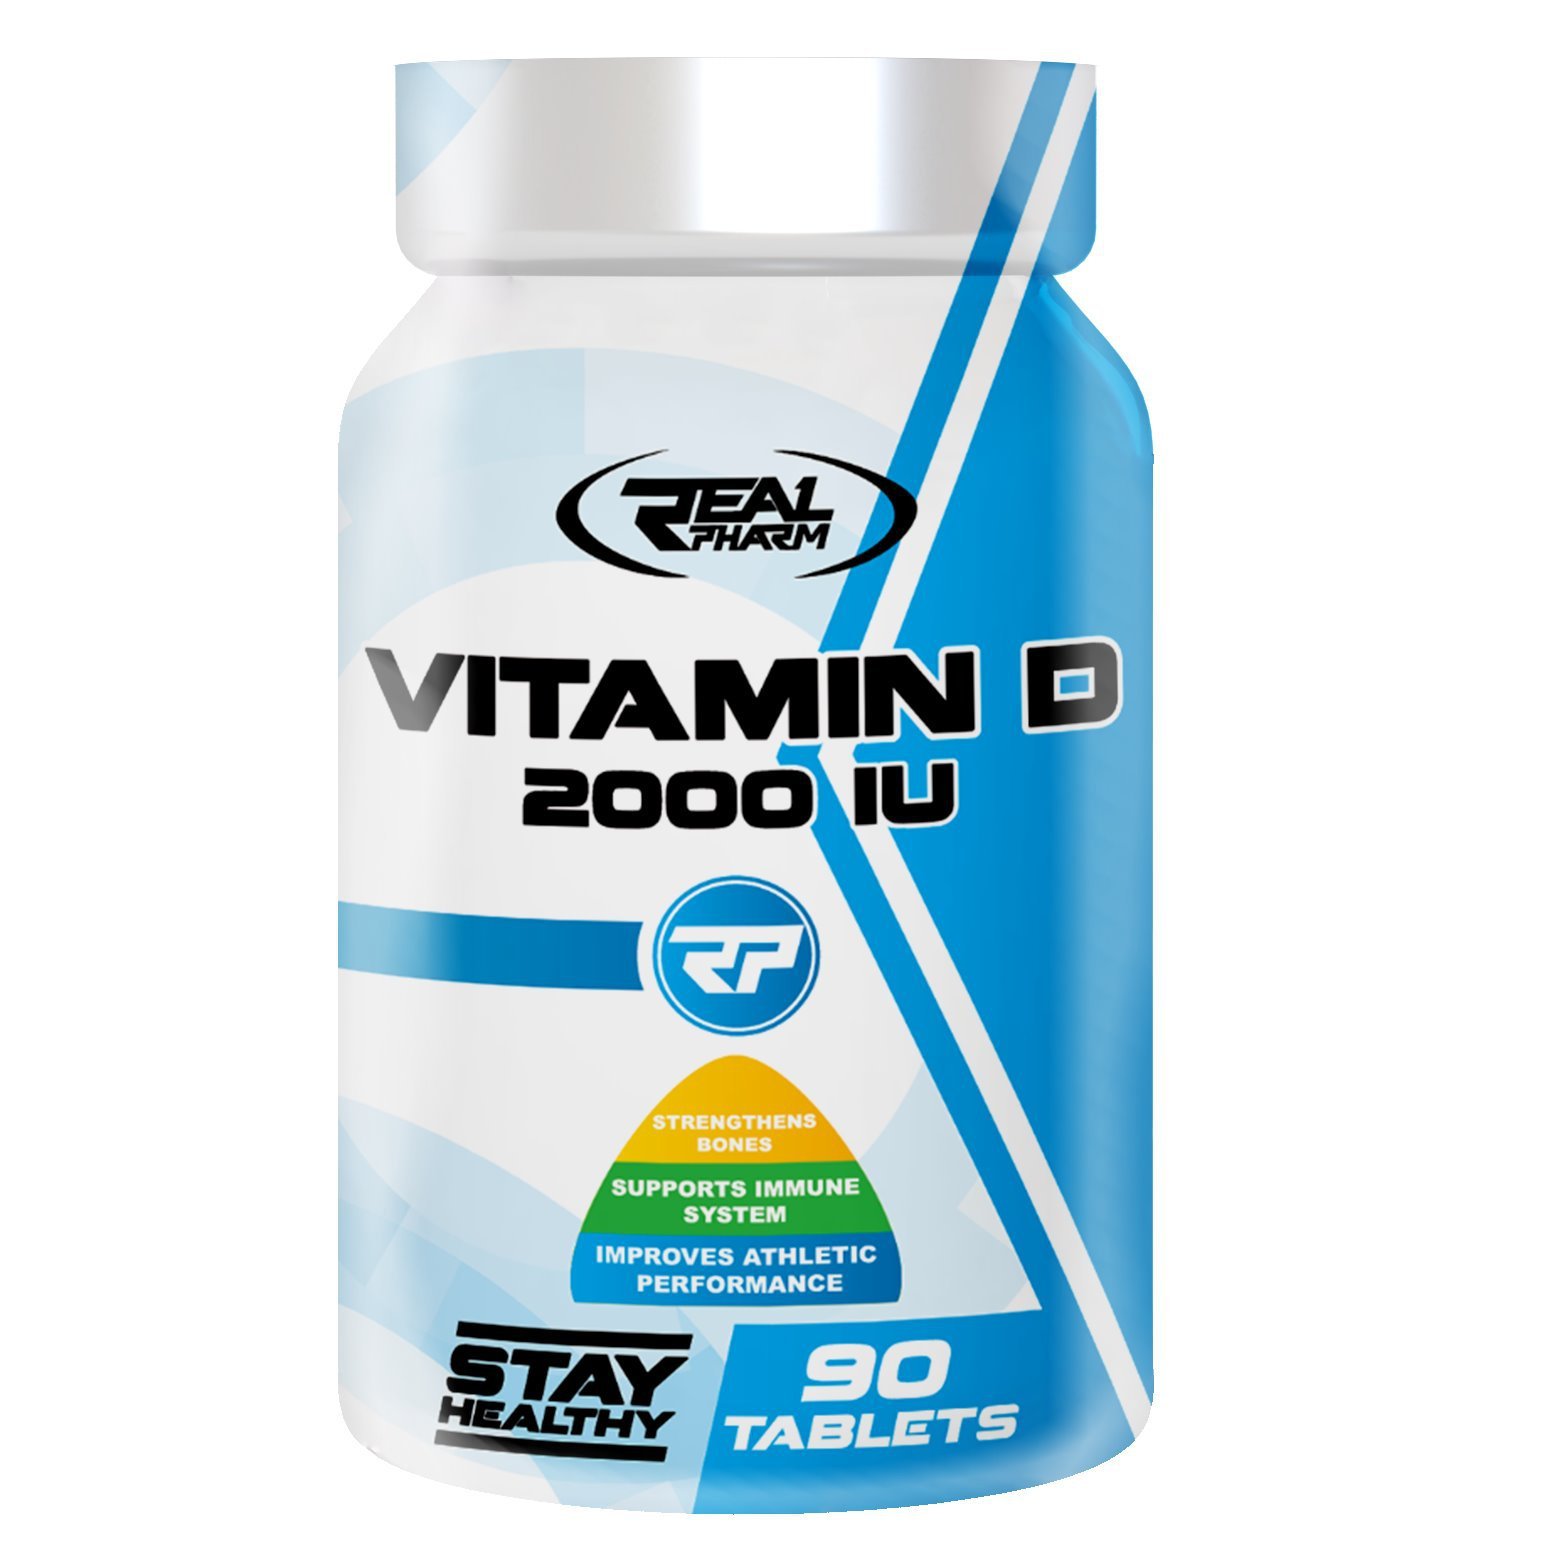 Vitamin D 2000 IU, 90 pcs, Real Pharm. Vitamin D. 